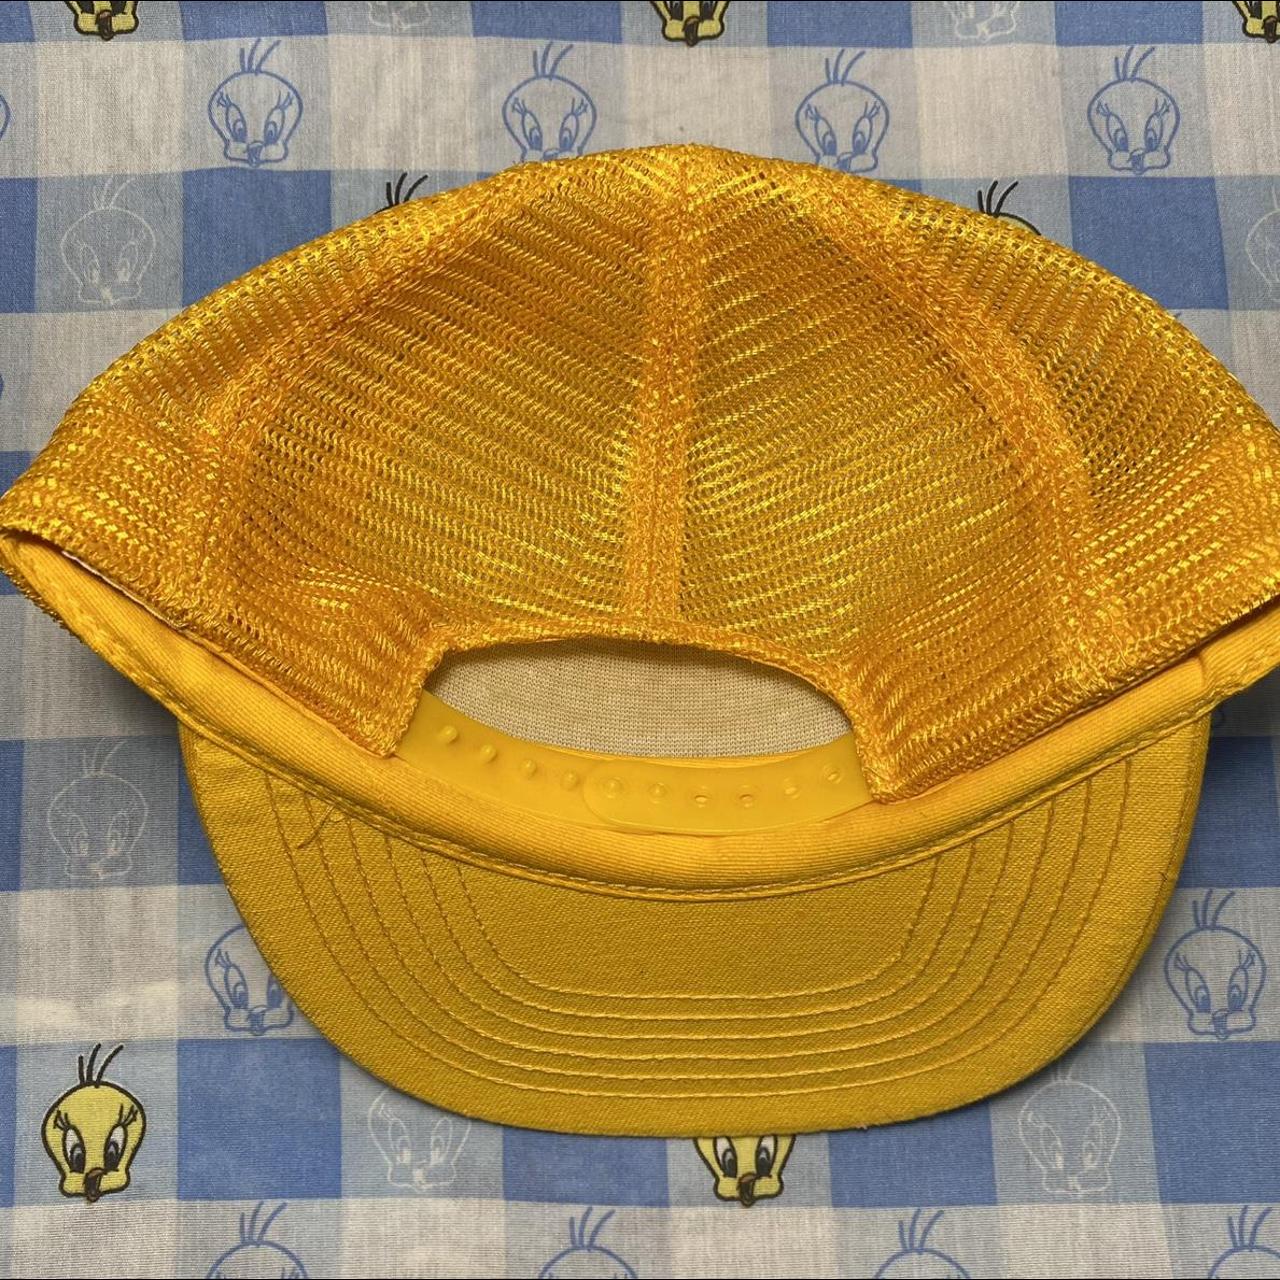 Corum Men's Yellow and Blue Hat (2)